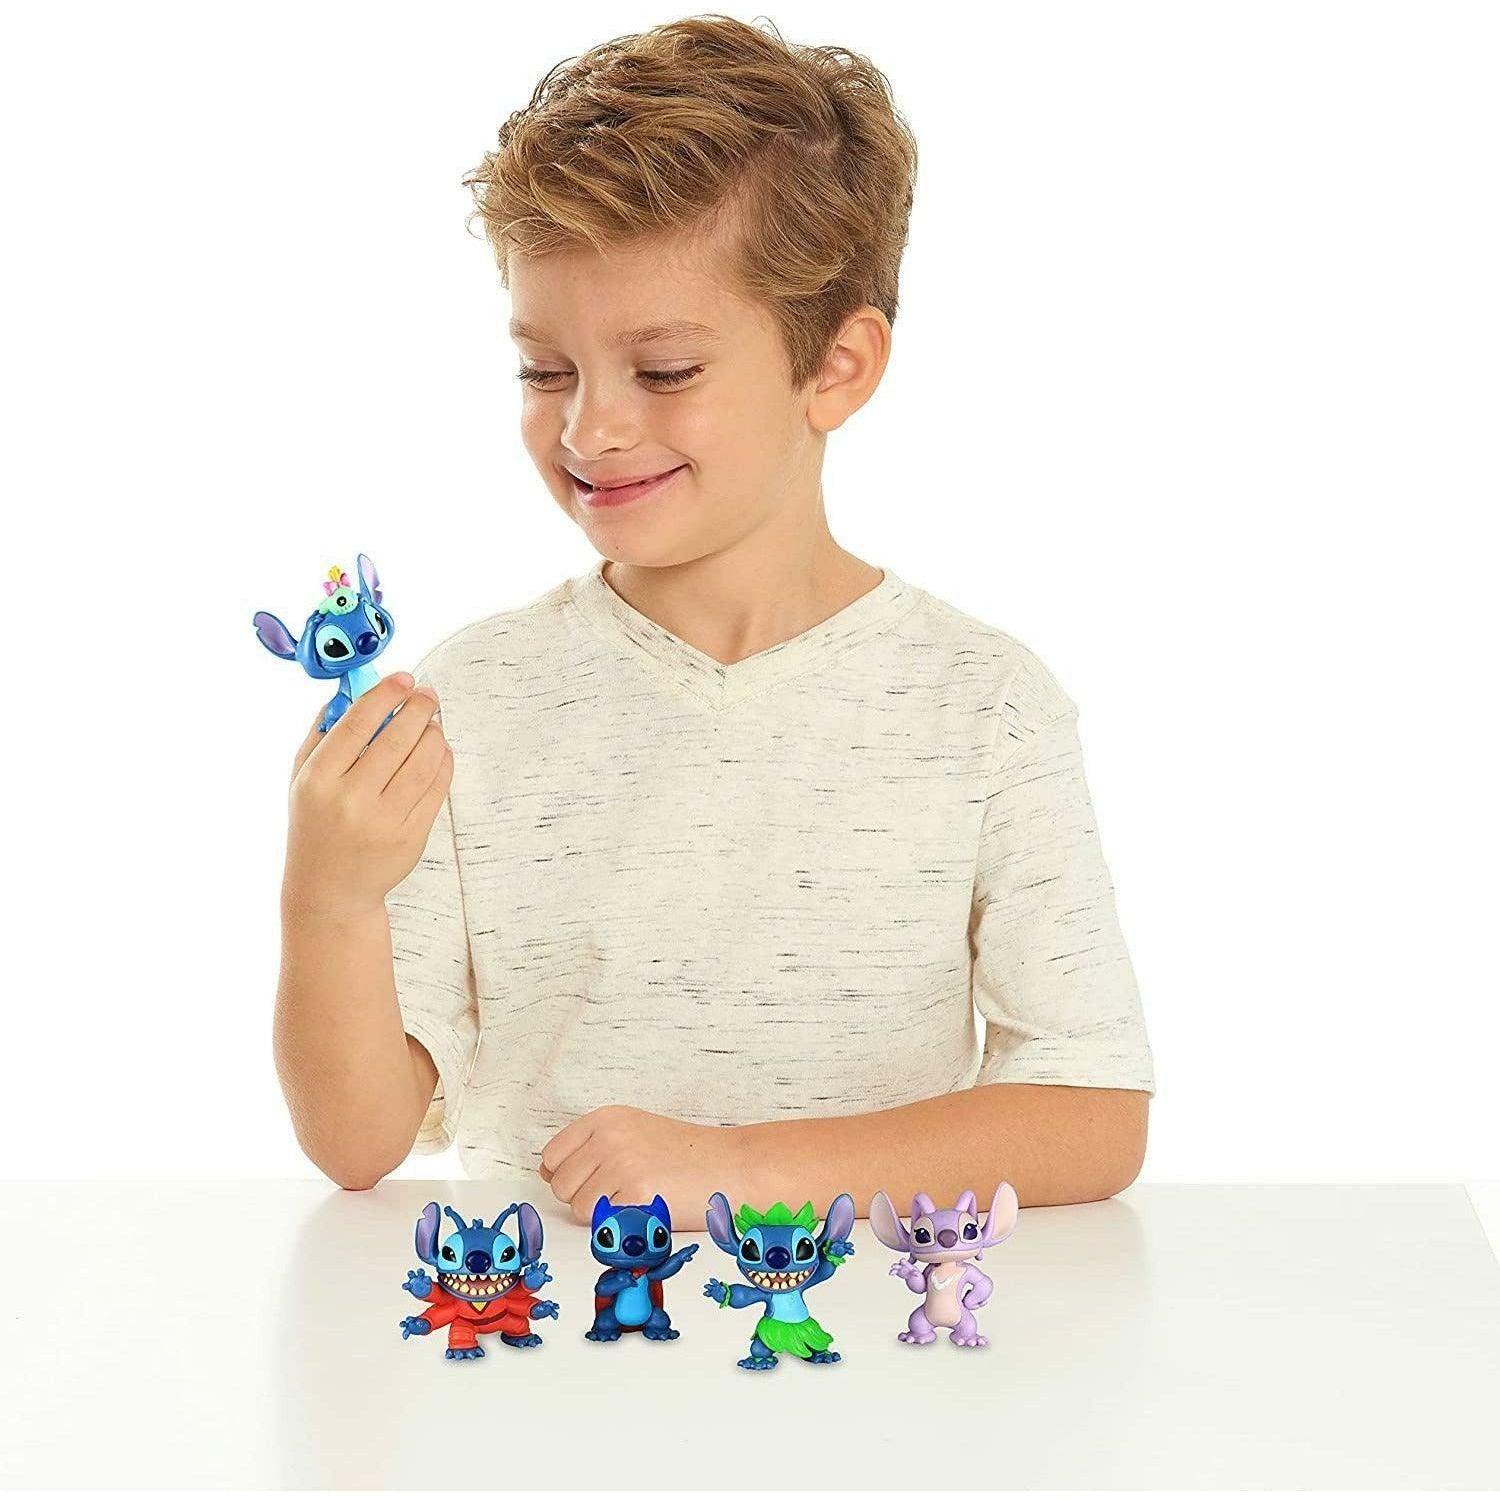 Disney’s Lilo & Stitch Collectible Stitch Figure Set 5 Pieces - BumbleToys - 2-4 Years, Disney, Lilo & Stitch, OXE, Pre-Order